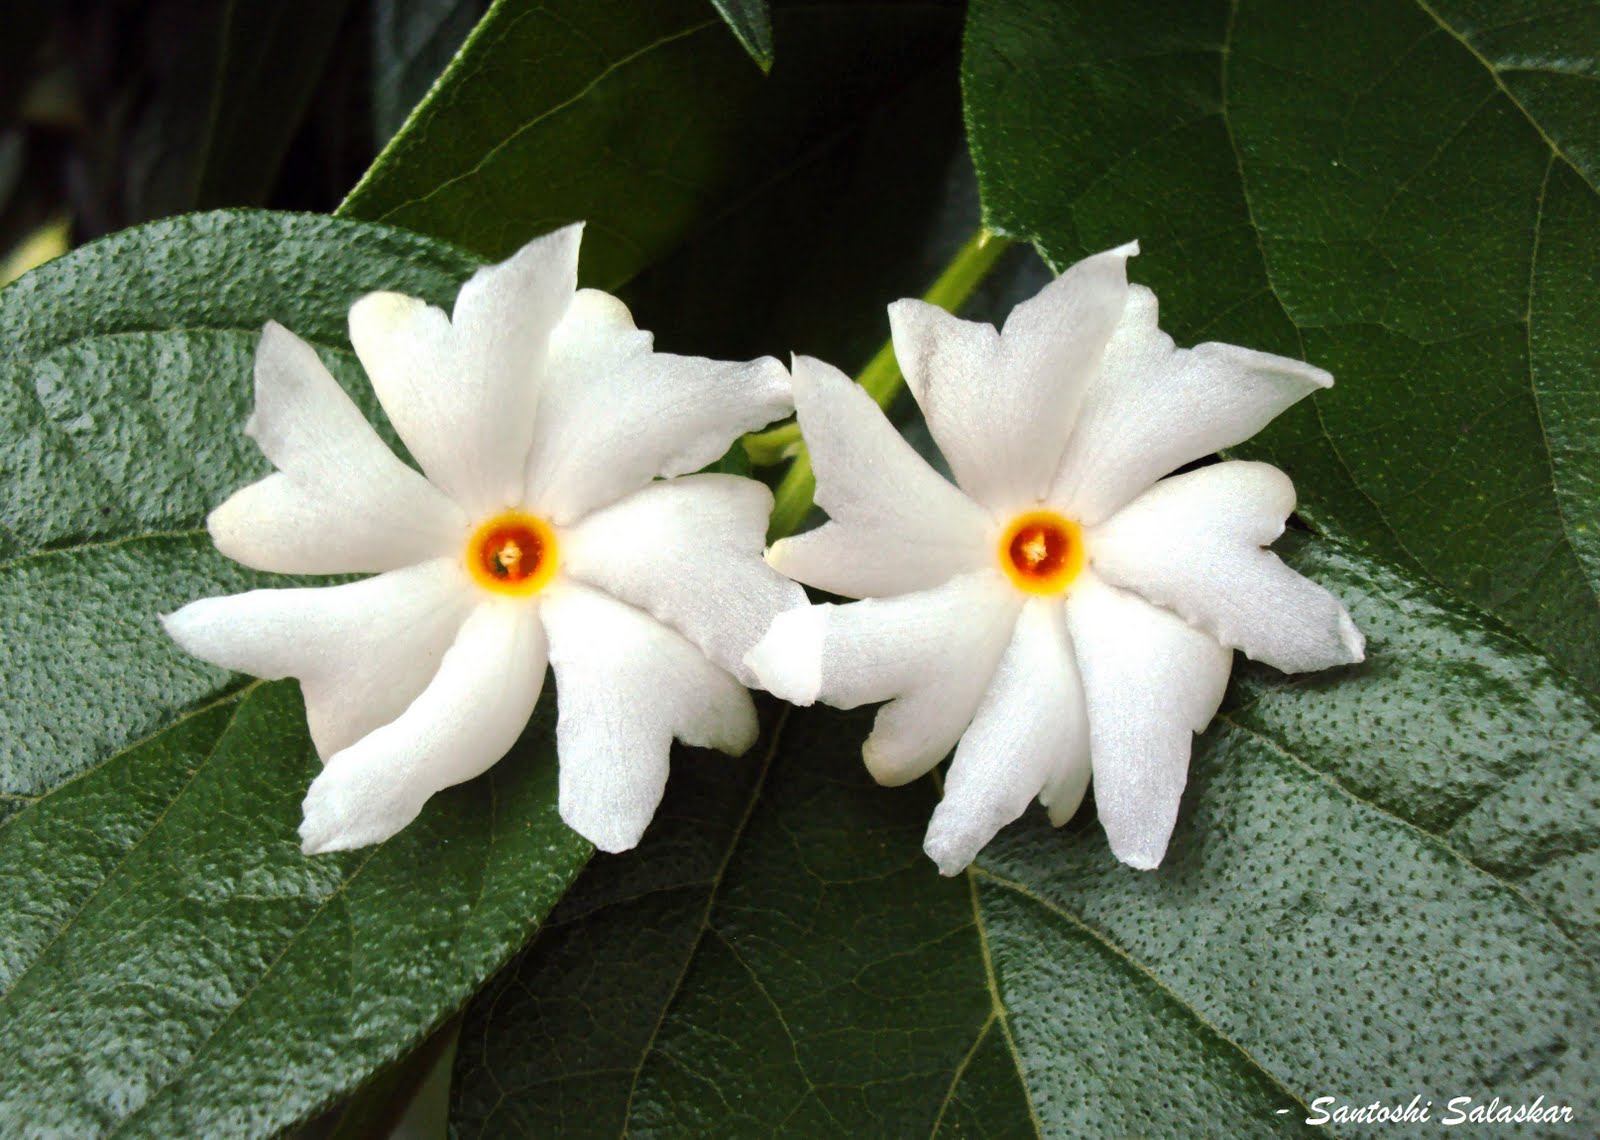 Parijat (also spelled Paarijat or Paarijaata) - Night flowering Jasmine